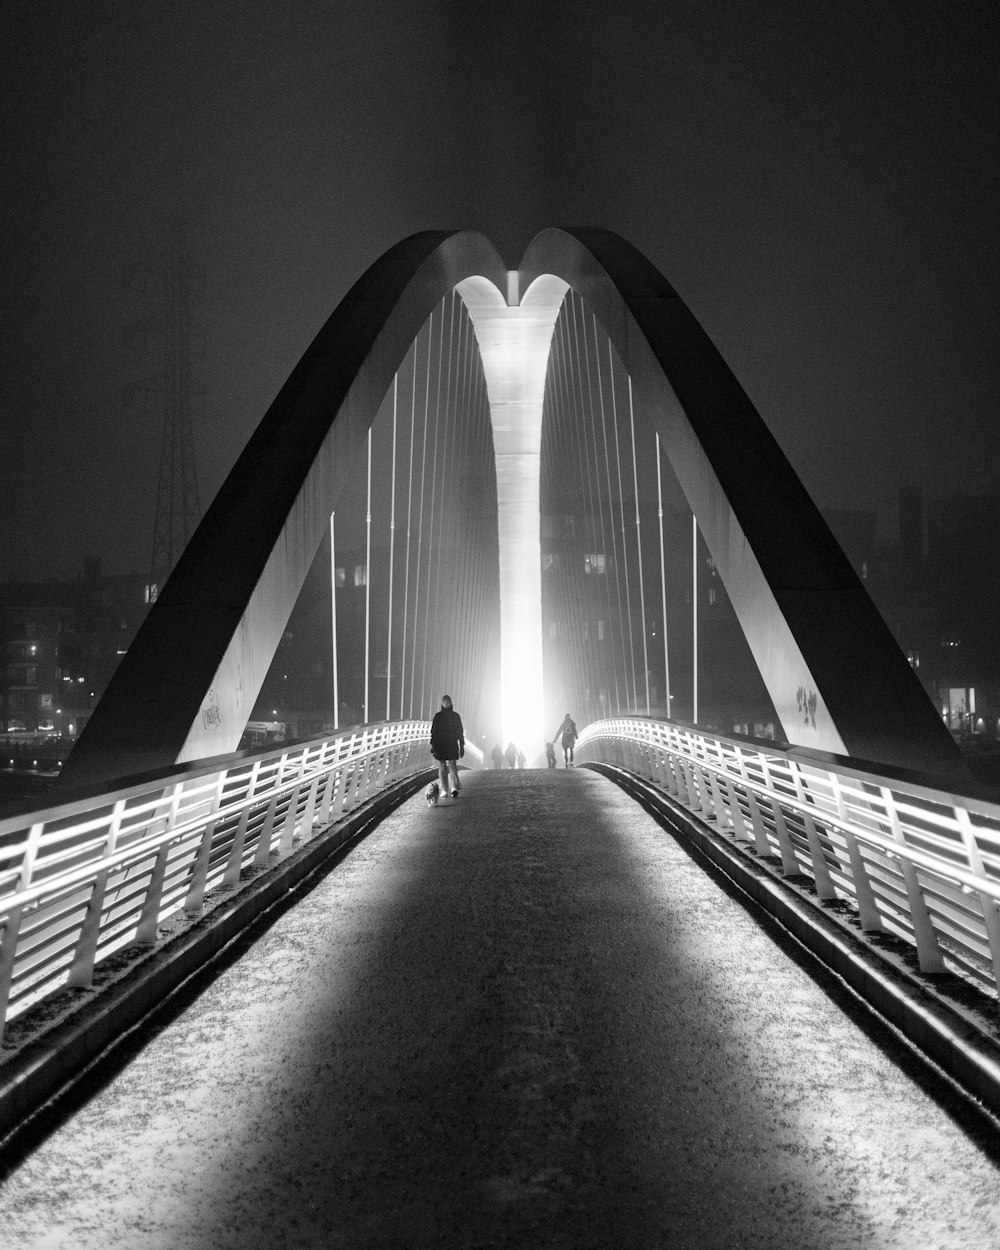 two people walking across a bridge at night